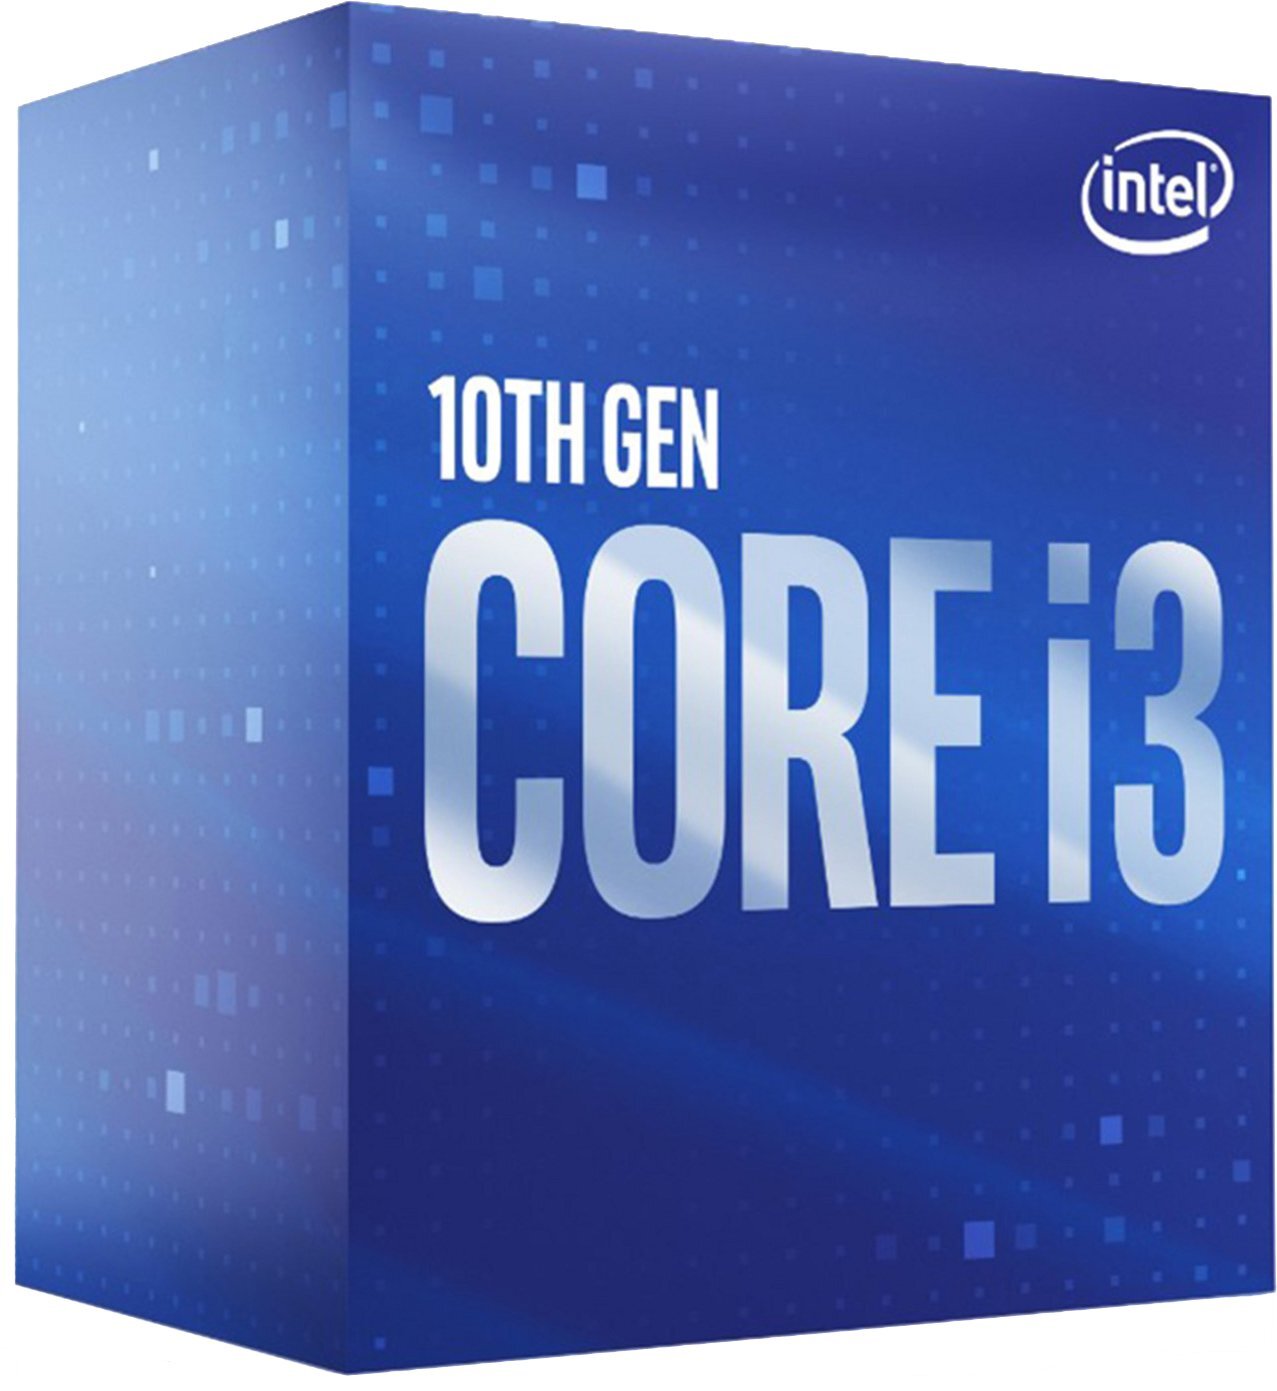 Процесор Intel Core i3-10105 4/8 3.7GHz 6M LGA1200 65W box (BX8070110105)фото